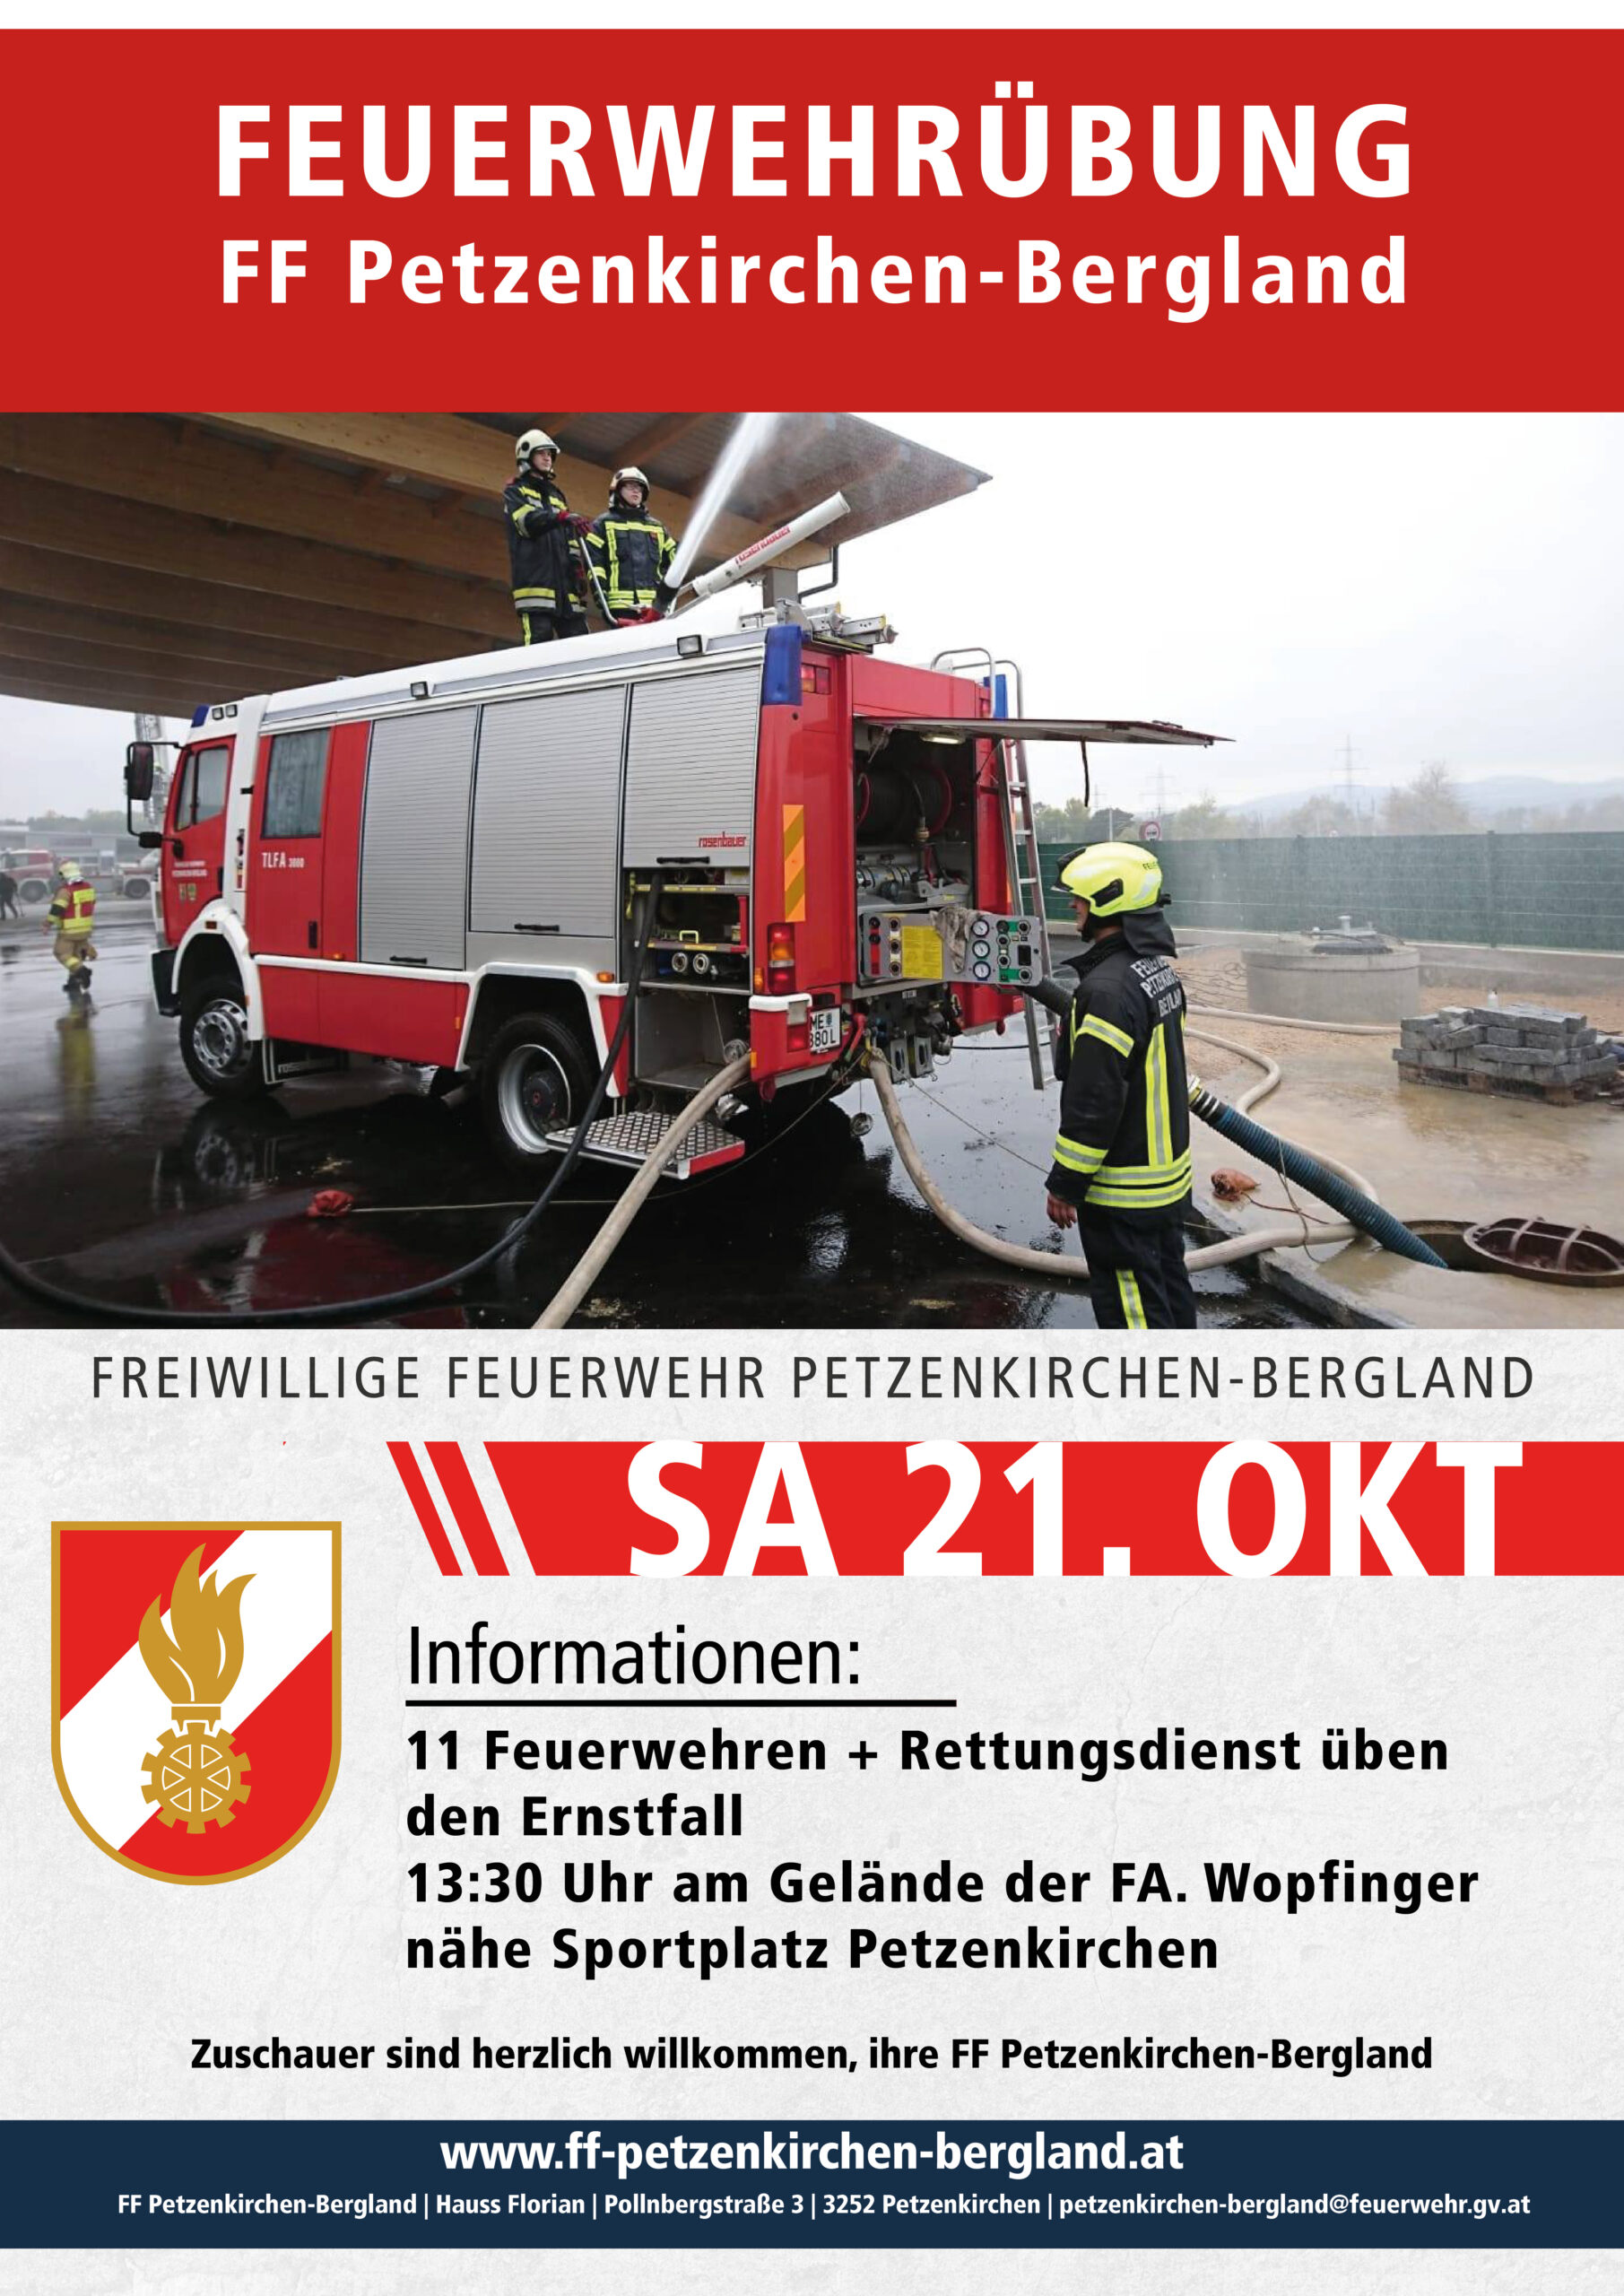 Feuerwehr Einsatzübung in Petzenkirchen » FF Petzenkirchen Bergland